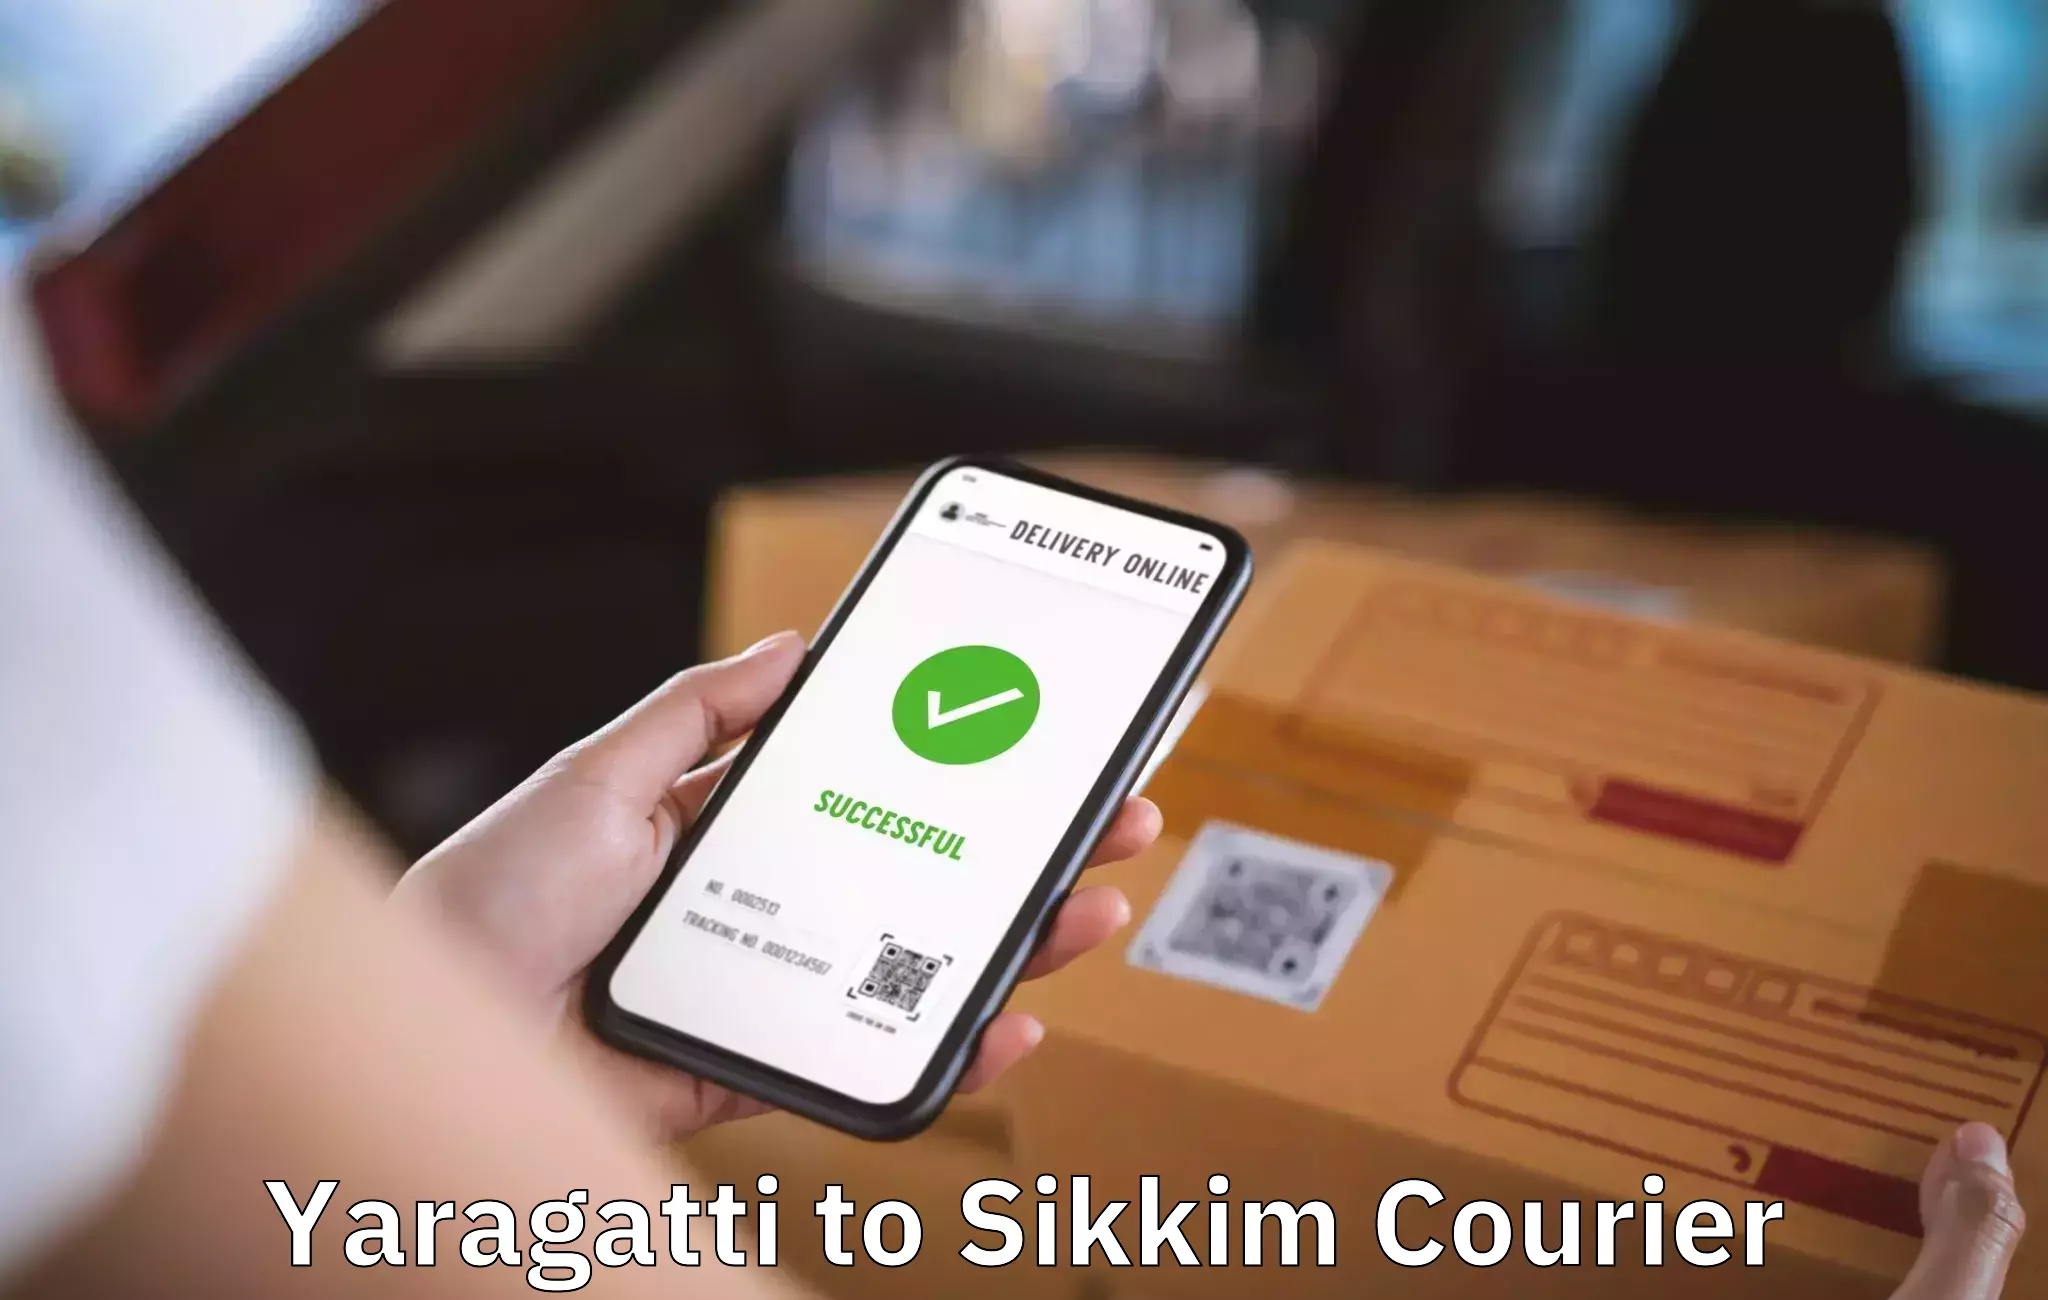 Efficient moving company Yaragatti to Sikkim